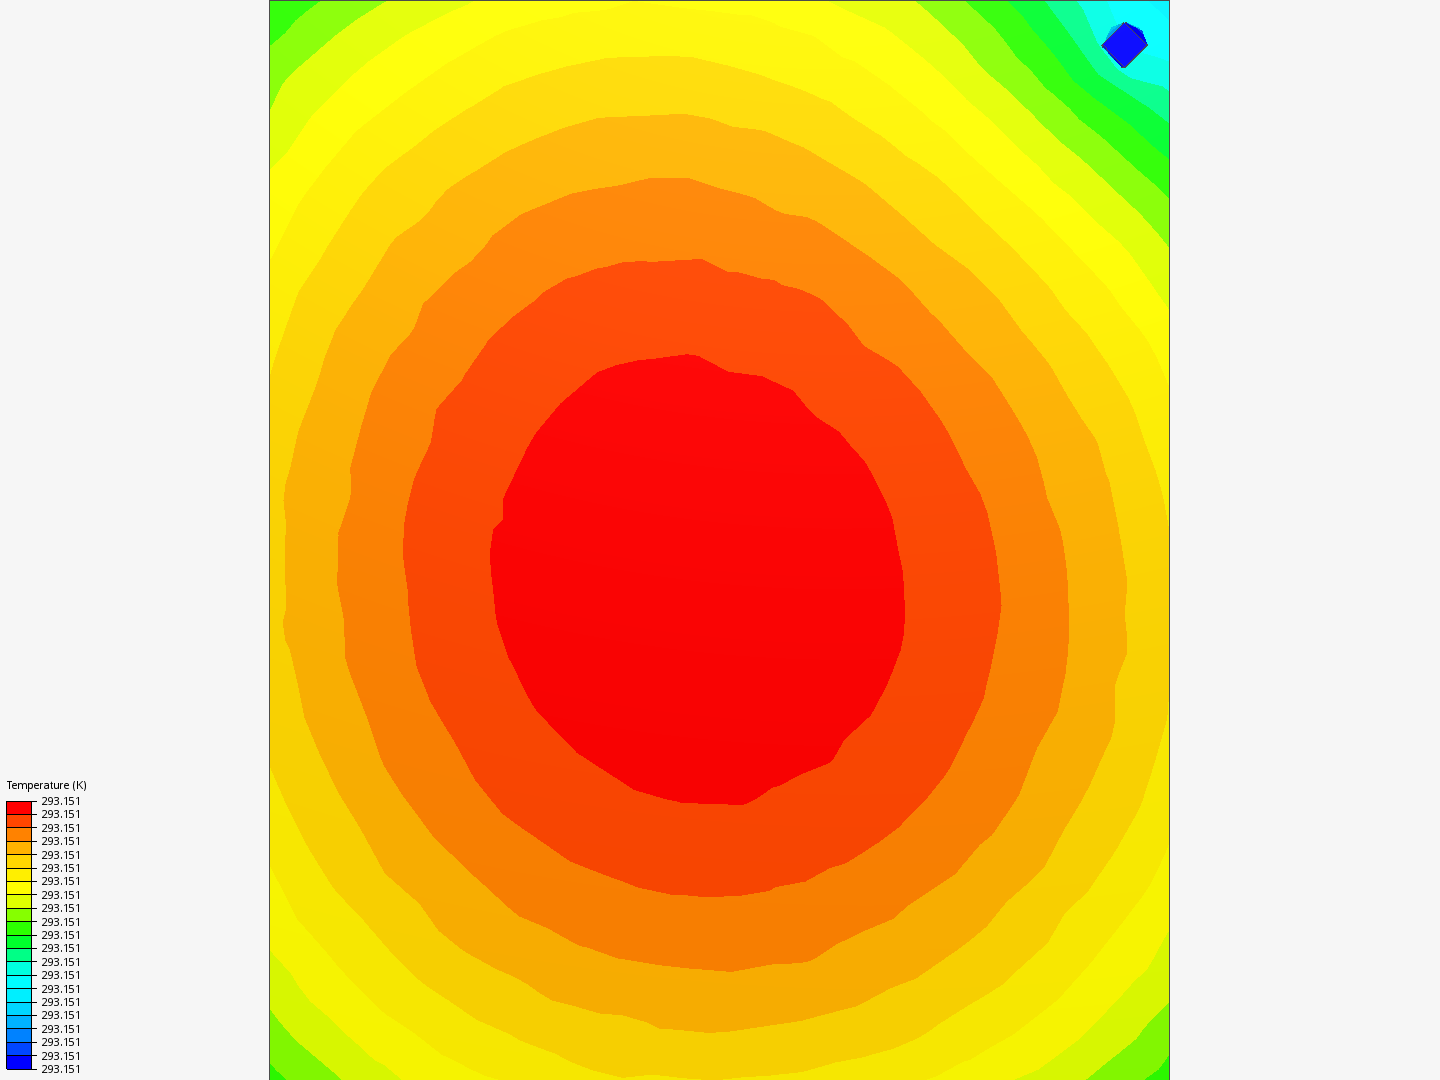 Heat Transfer simulation image